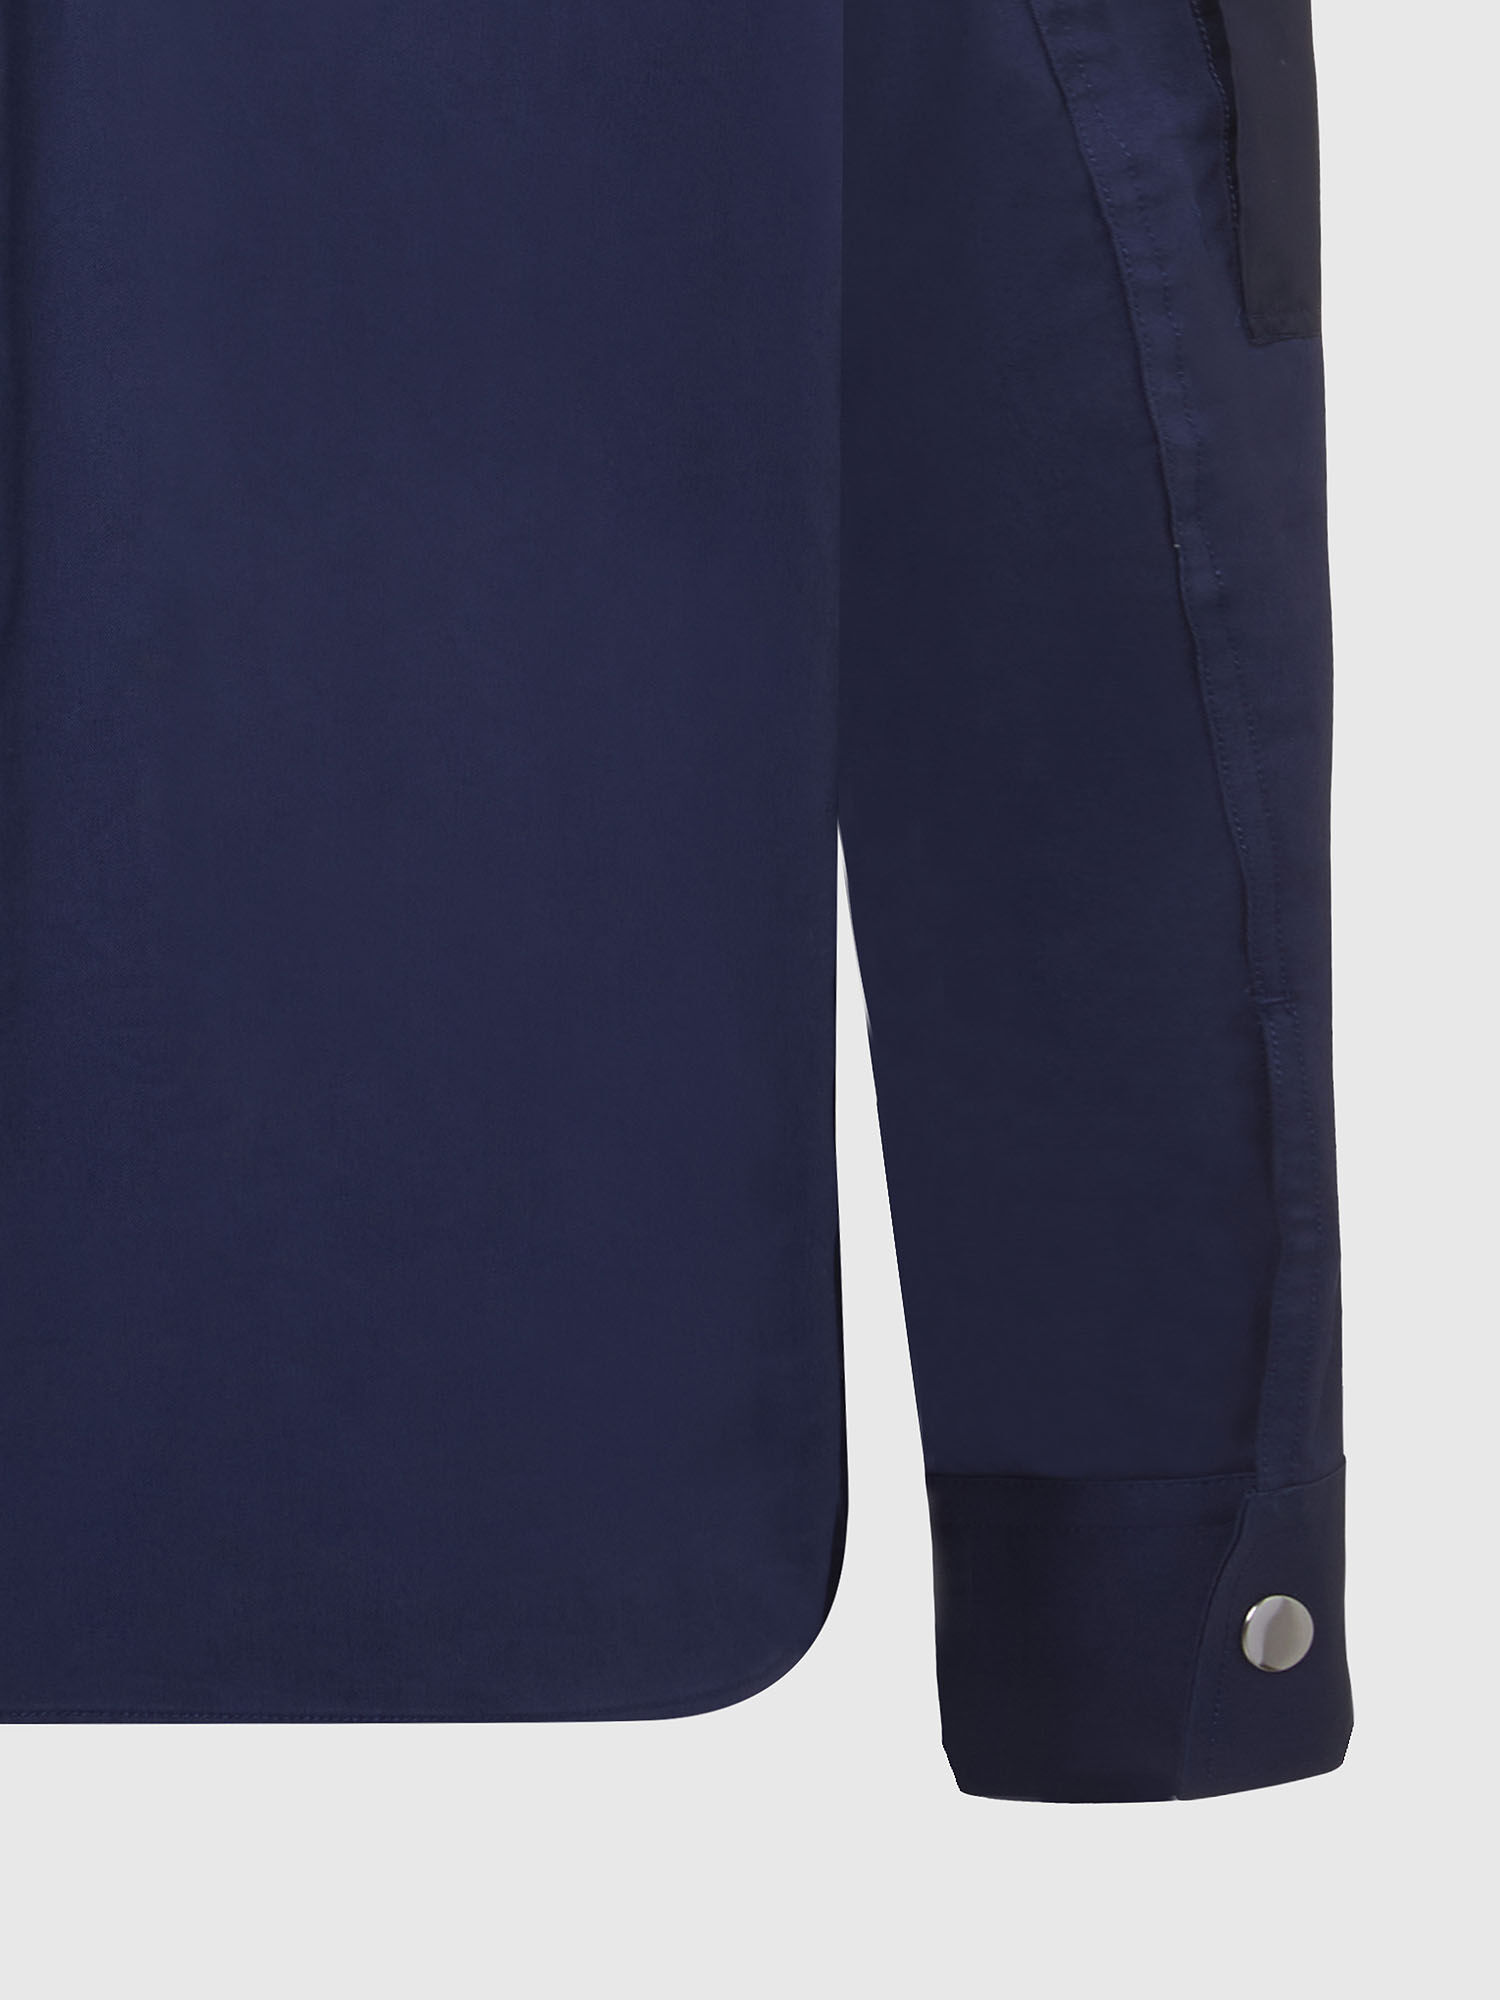 S-AUSTIN Man: Shirt in twill and nylon | Diesel